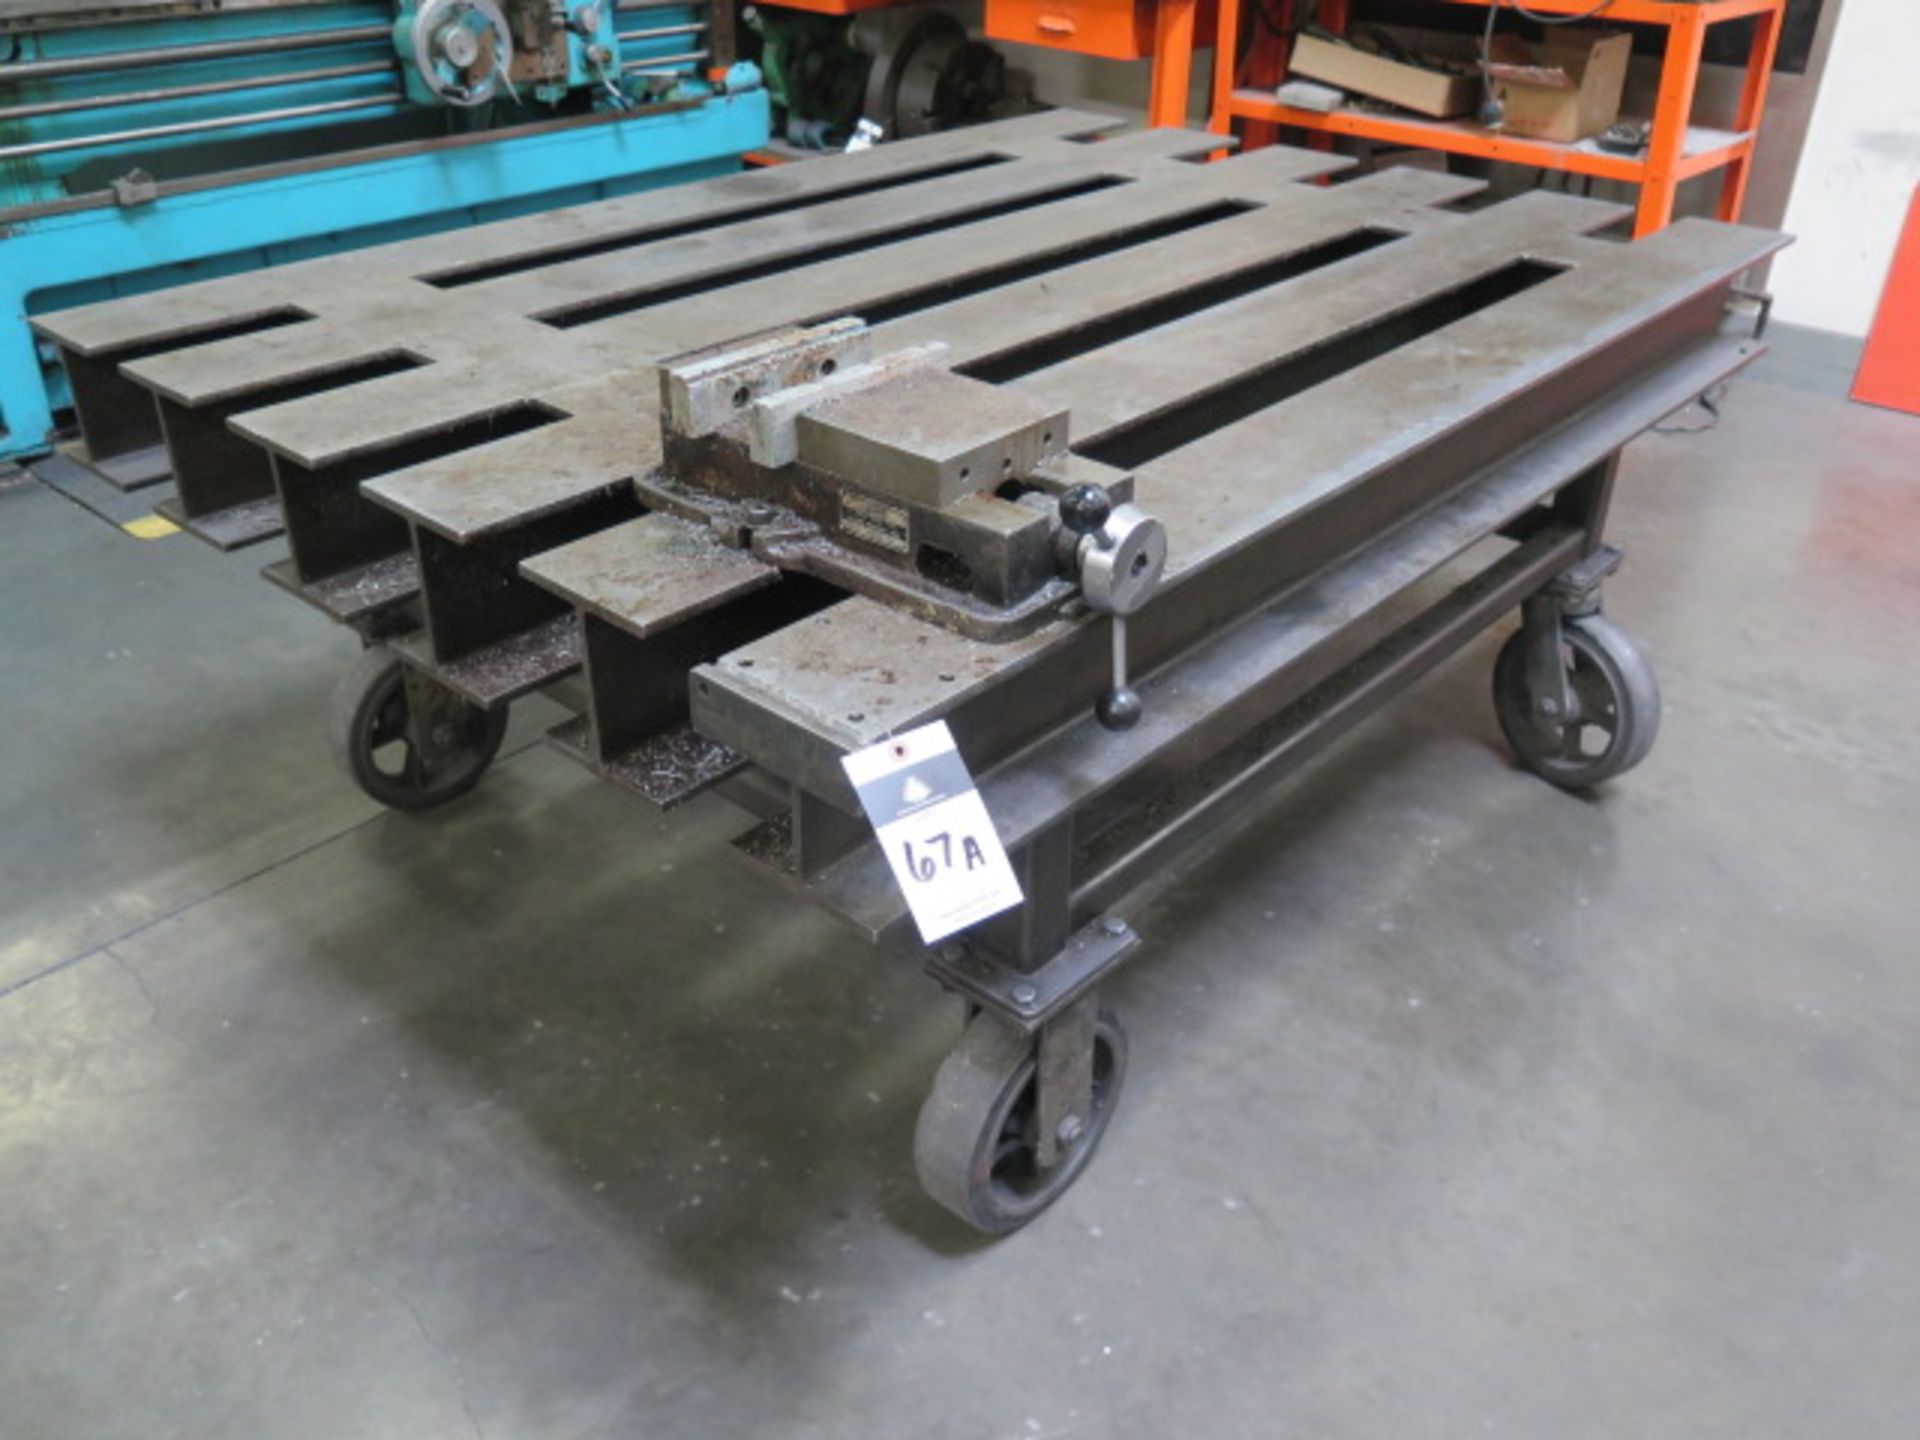 Steel Fabrication Table w/ 6" Angle-Lock Vise